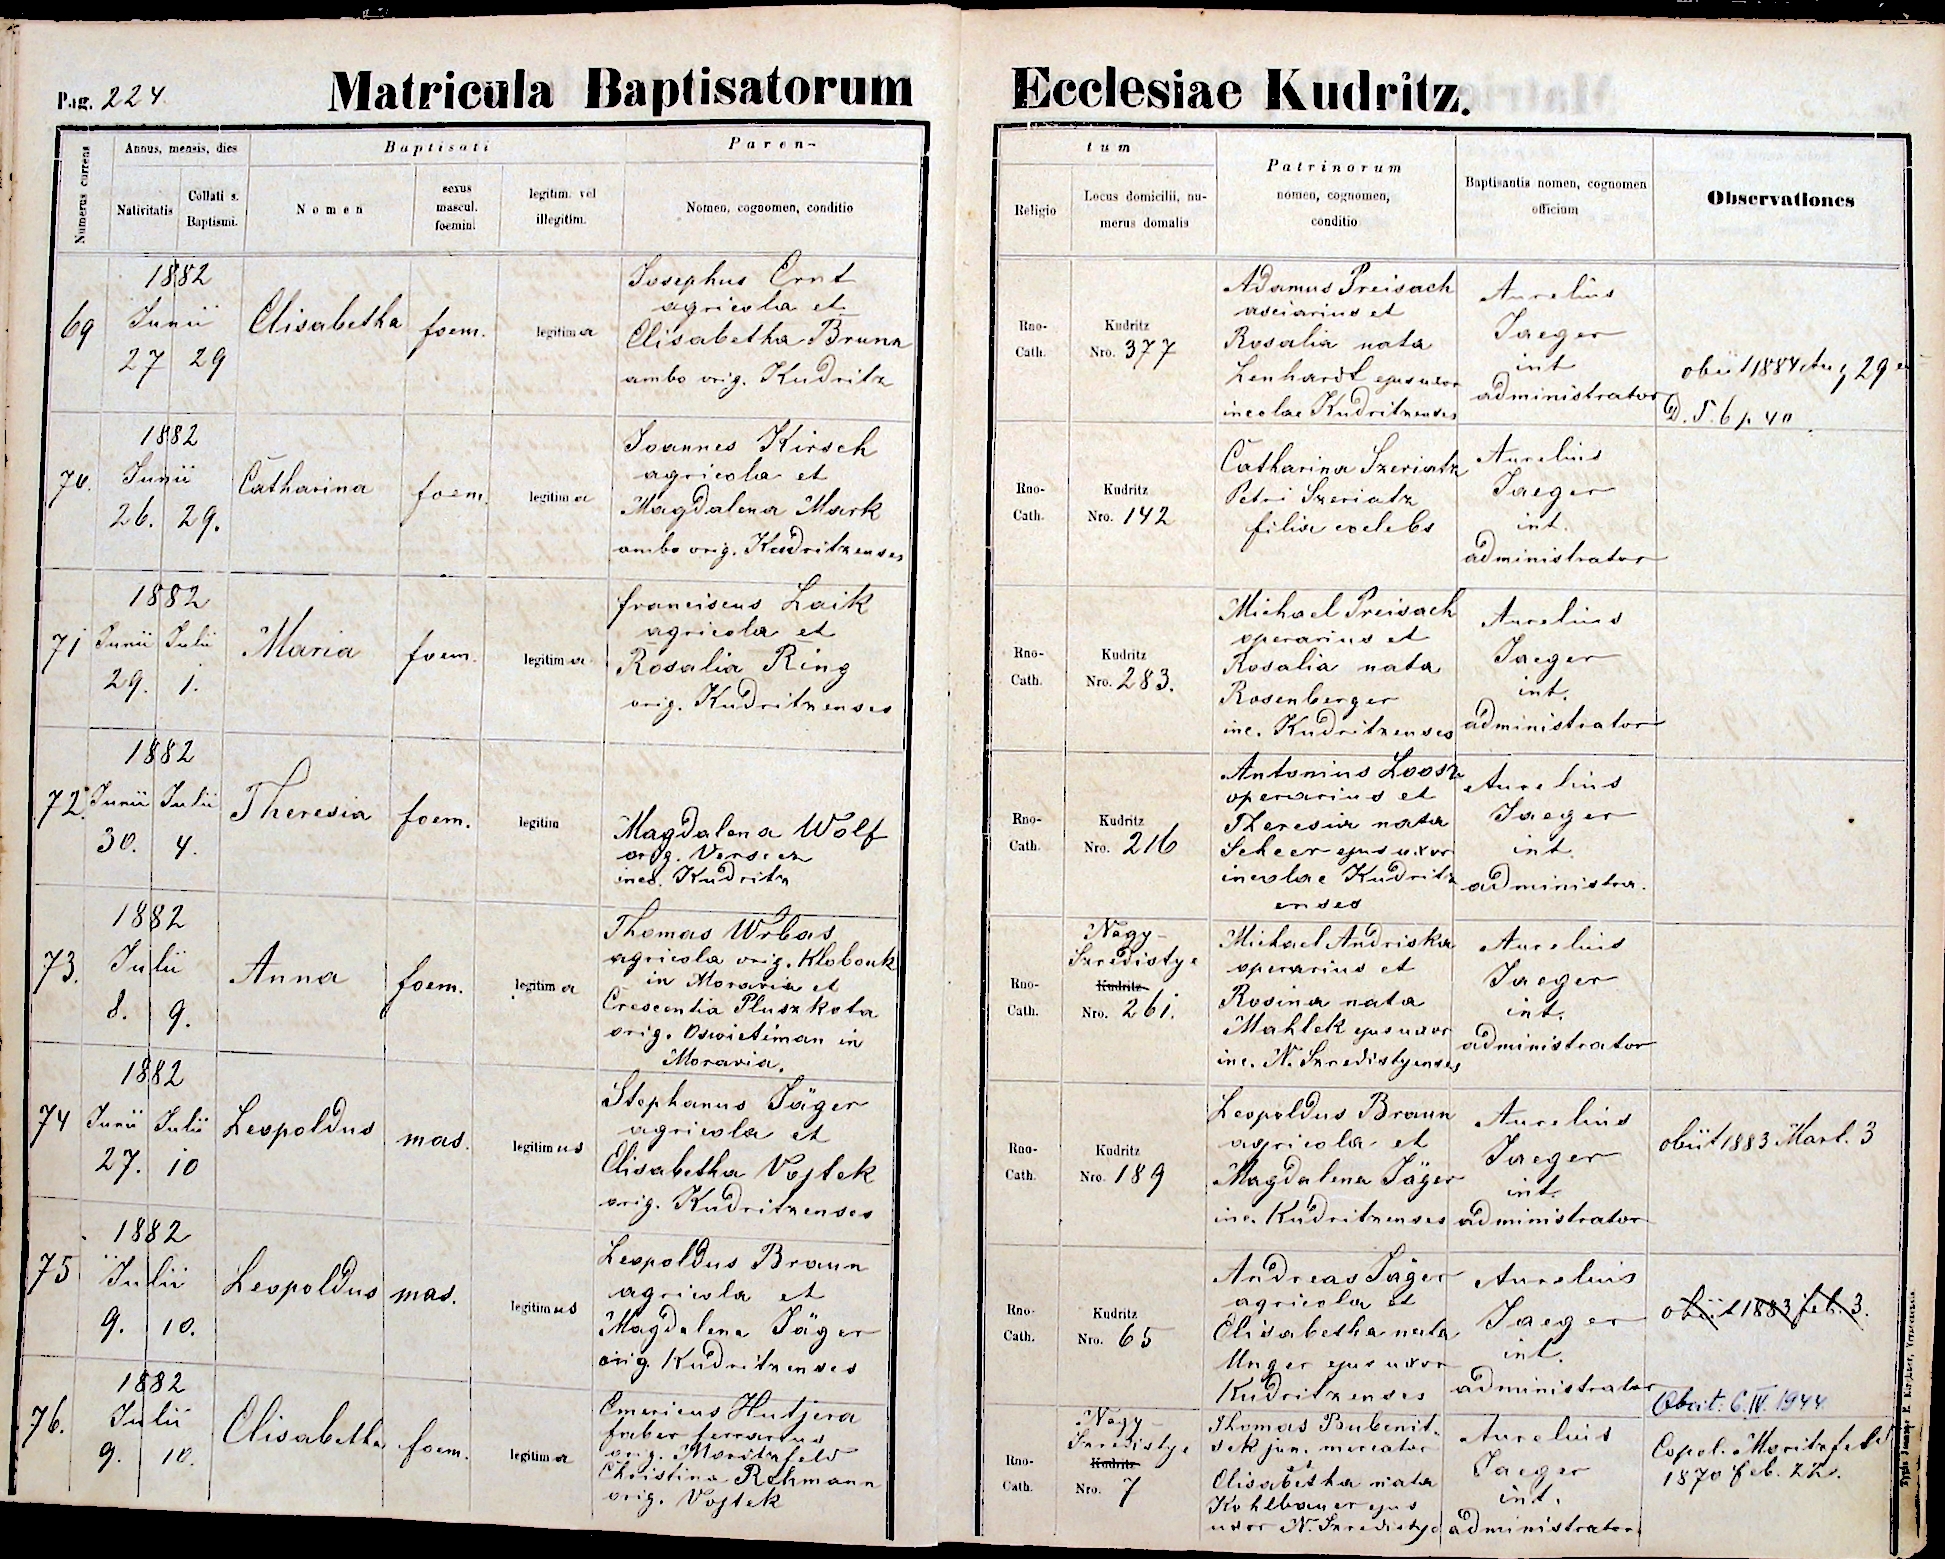 images/church_records/BIRTHS/1880-1883B/1882/224